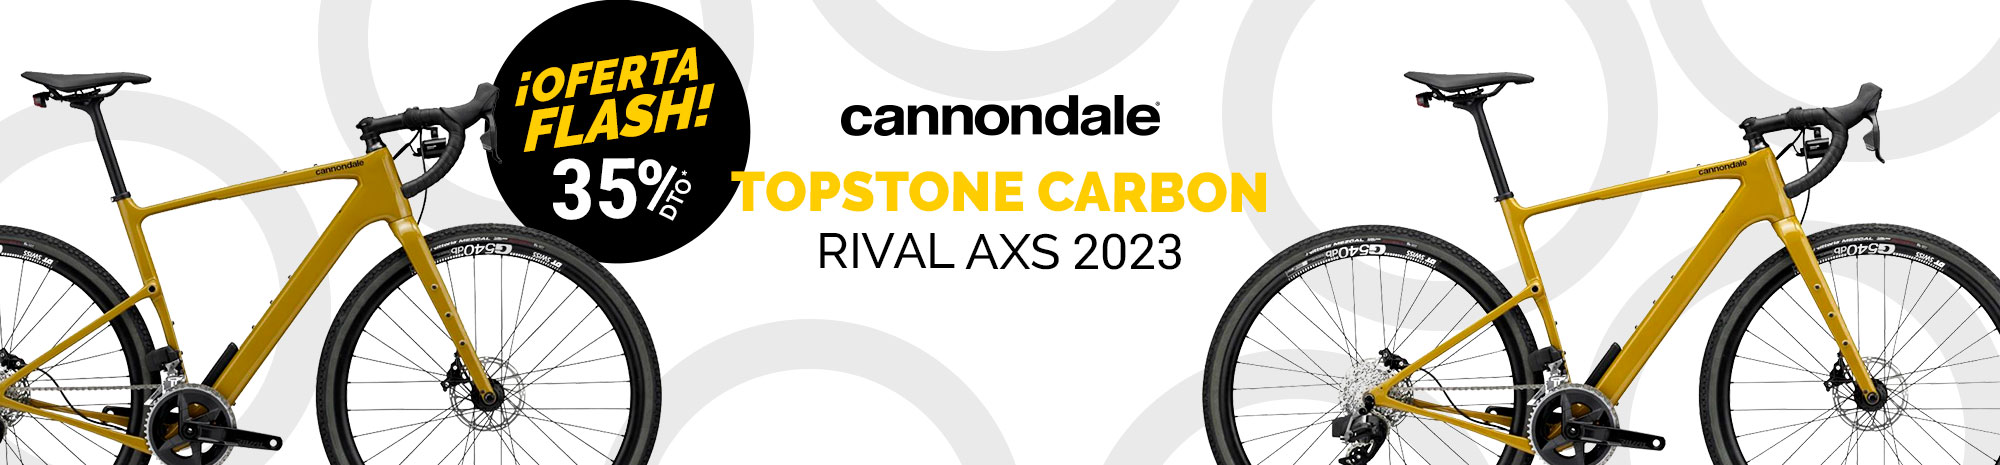 Cannondale Topstone Carbon Rival AXS